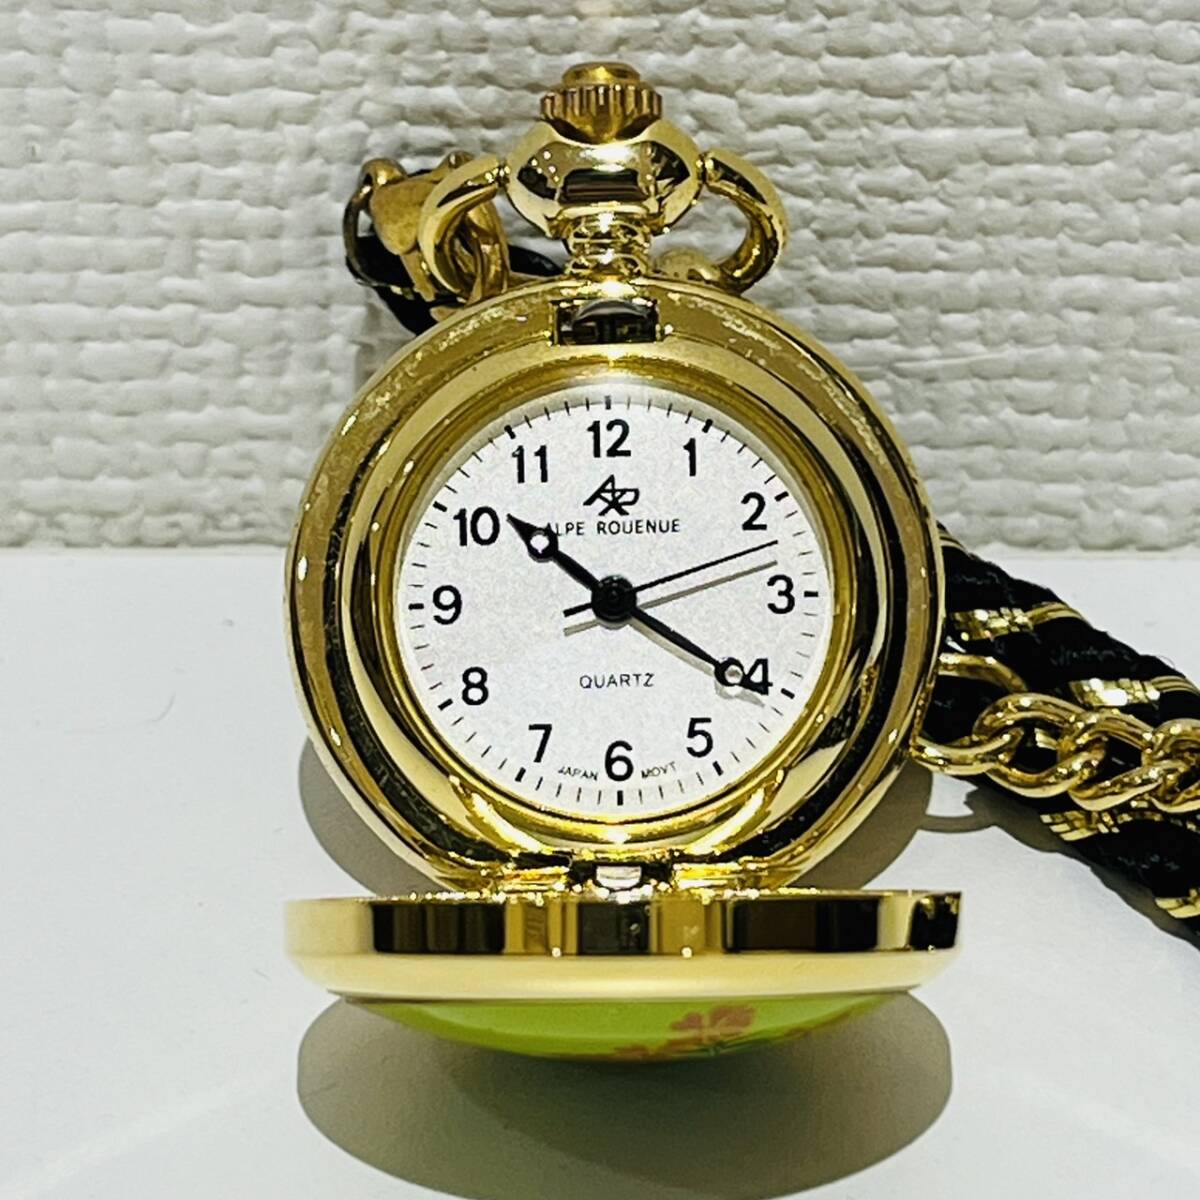 [AMT-10240]1 jpy ~ALPE ROUENUE Japanese clothes clock 3 point set magnifier type pocket watch quartz box attaching antique collection immovable goods Junk 